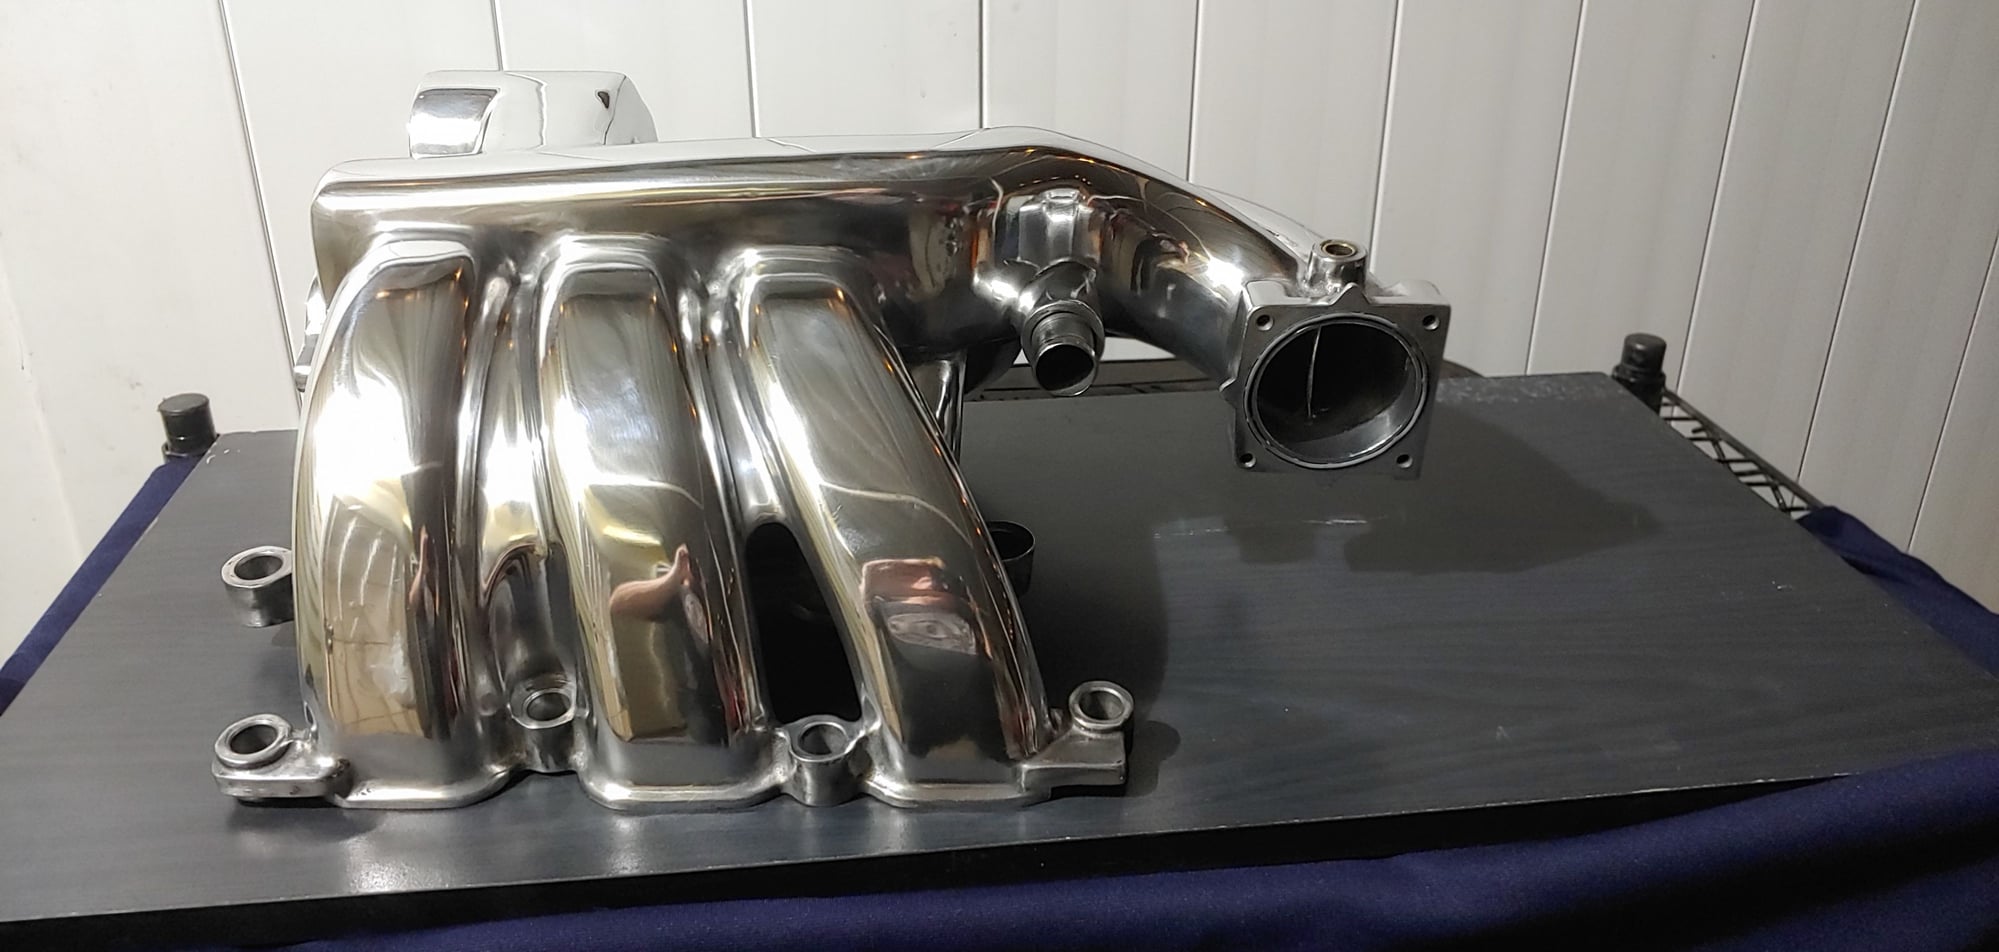 Engine - Intake/Fuel - Polished Intake manifold 2.5/3.0 v6 - Used - 2000 to 2015 Jaguar X-Type - Stockton, CA 95205, United States